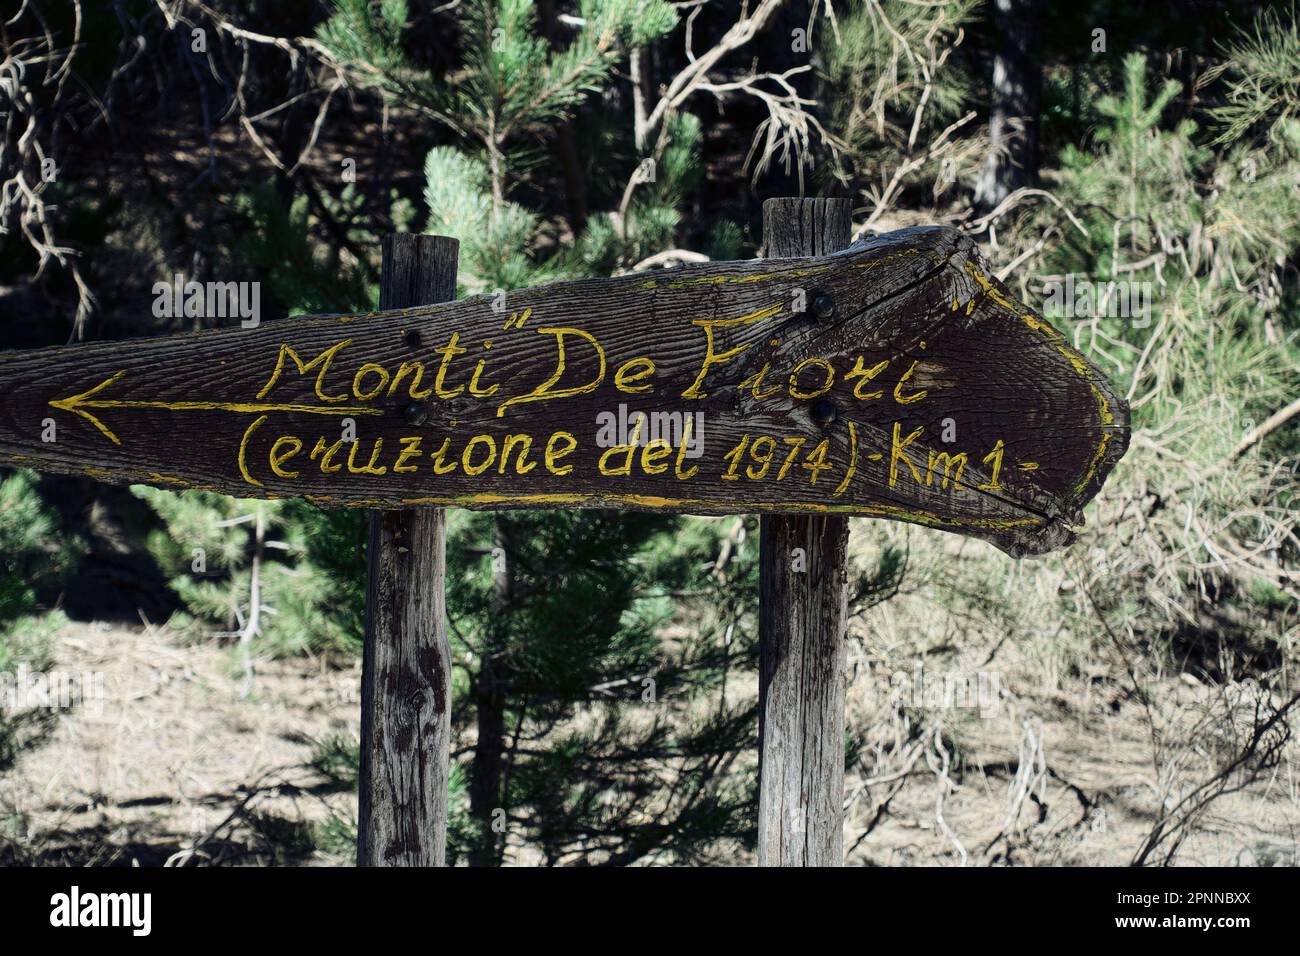 help tourist direction with text ''Monti de Fiori' - (eruzione del 1974) km 1' in Etna National Park, Sicily, Italy Stock Photo